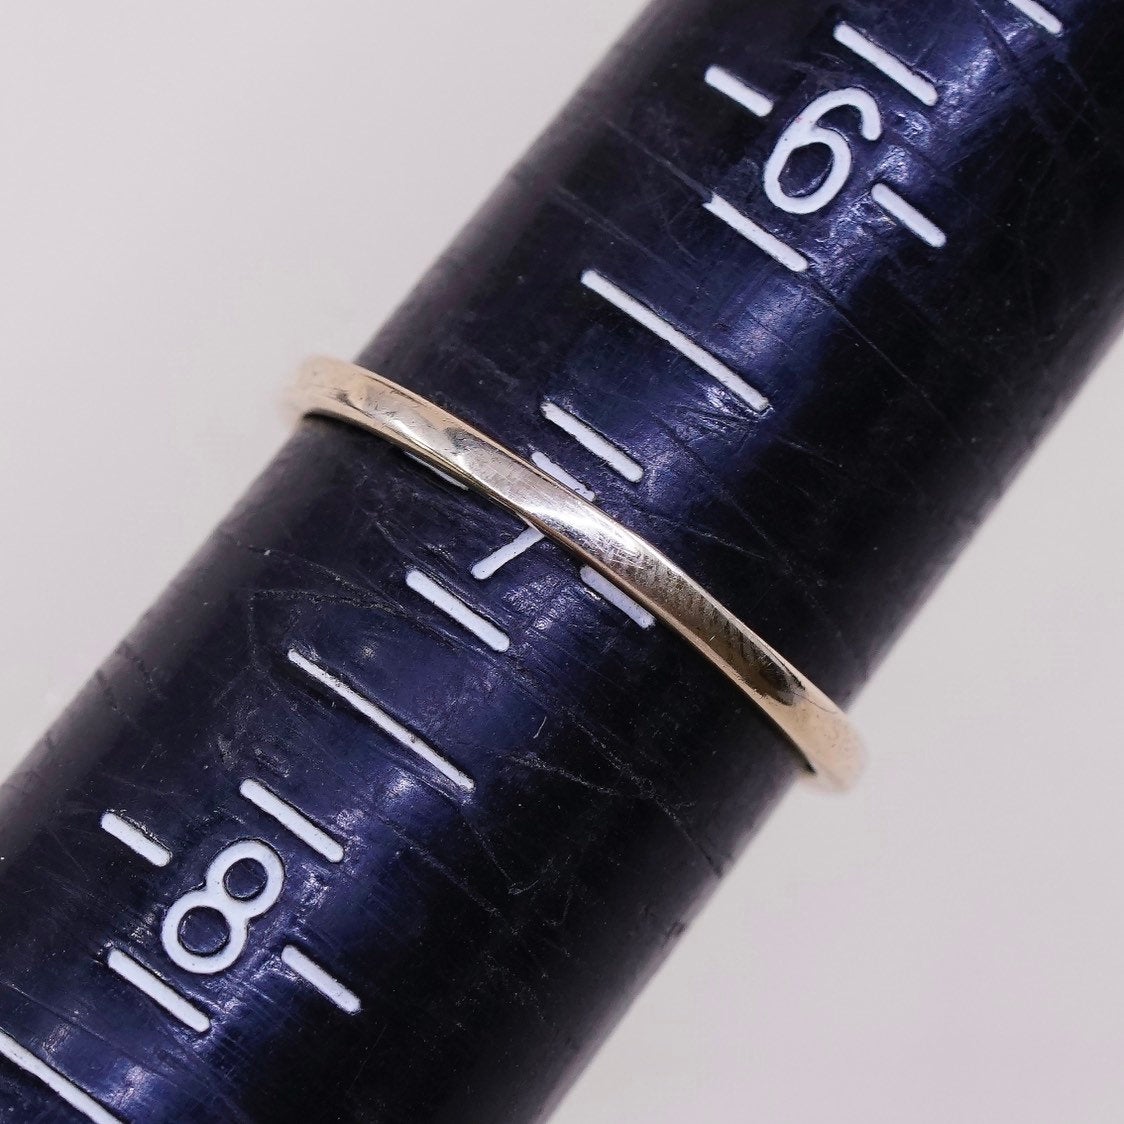 sz 7, Vermeil gold sterling silver citrine ring, 925 flower engagement ring